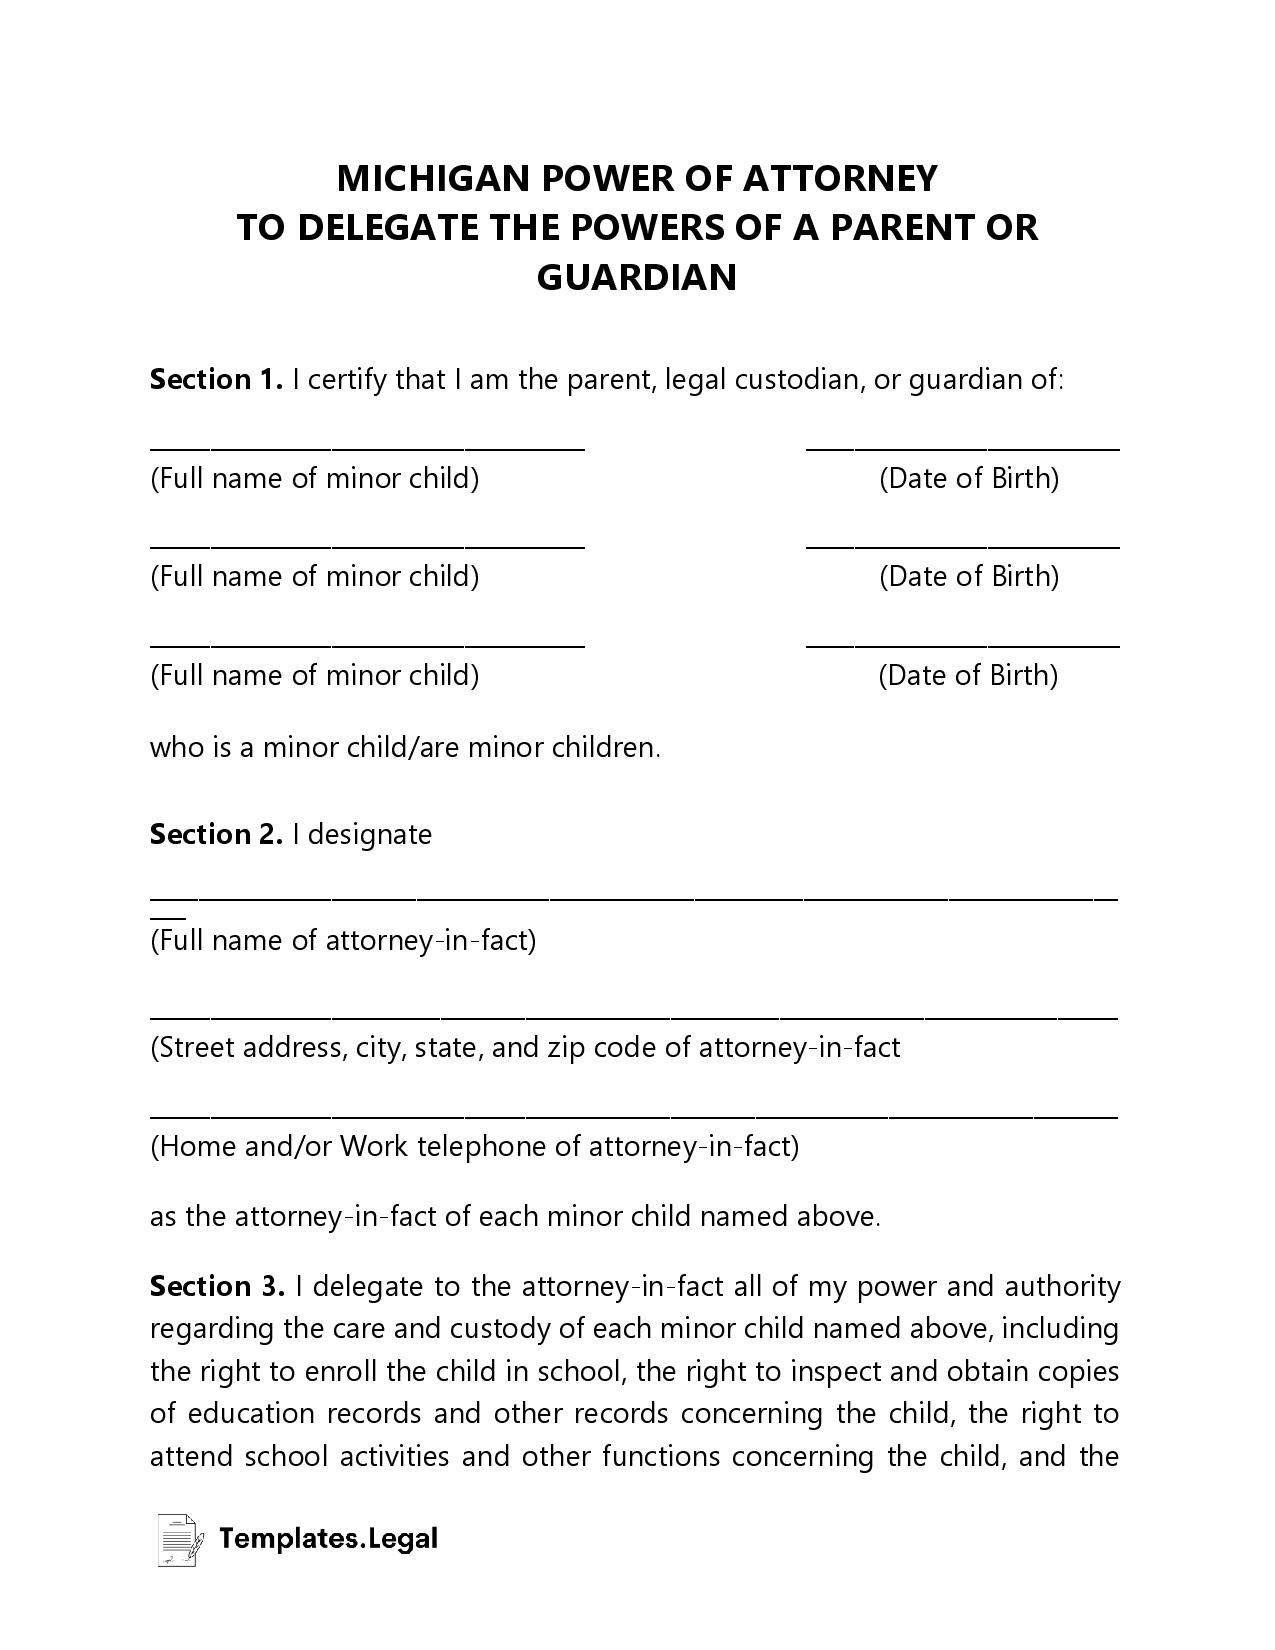 Michigan Minor (Child) Power of Attorney - Templates.Legal